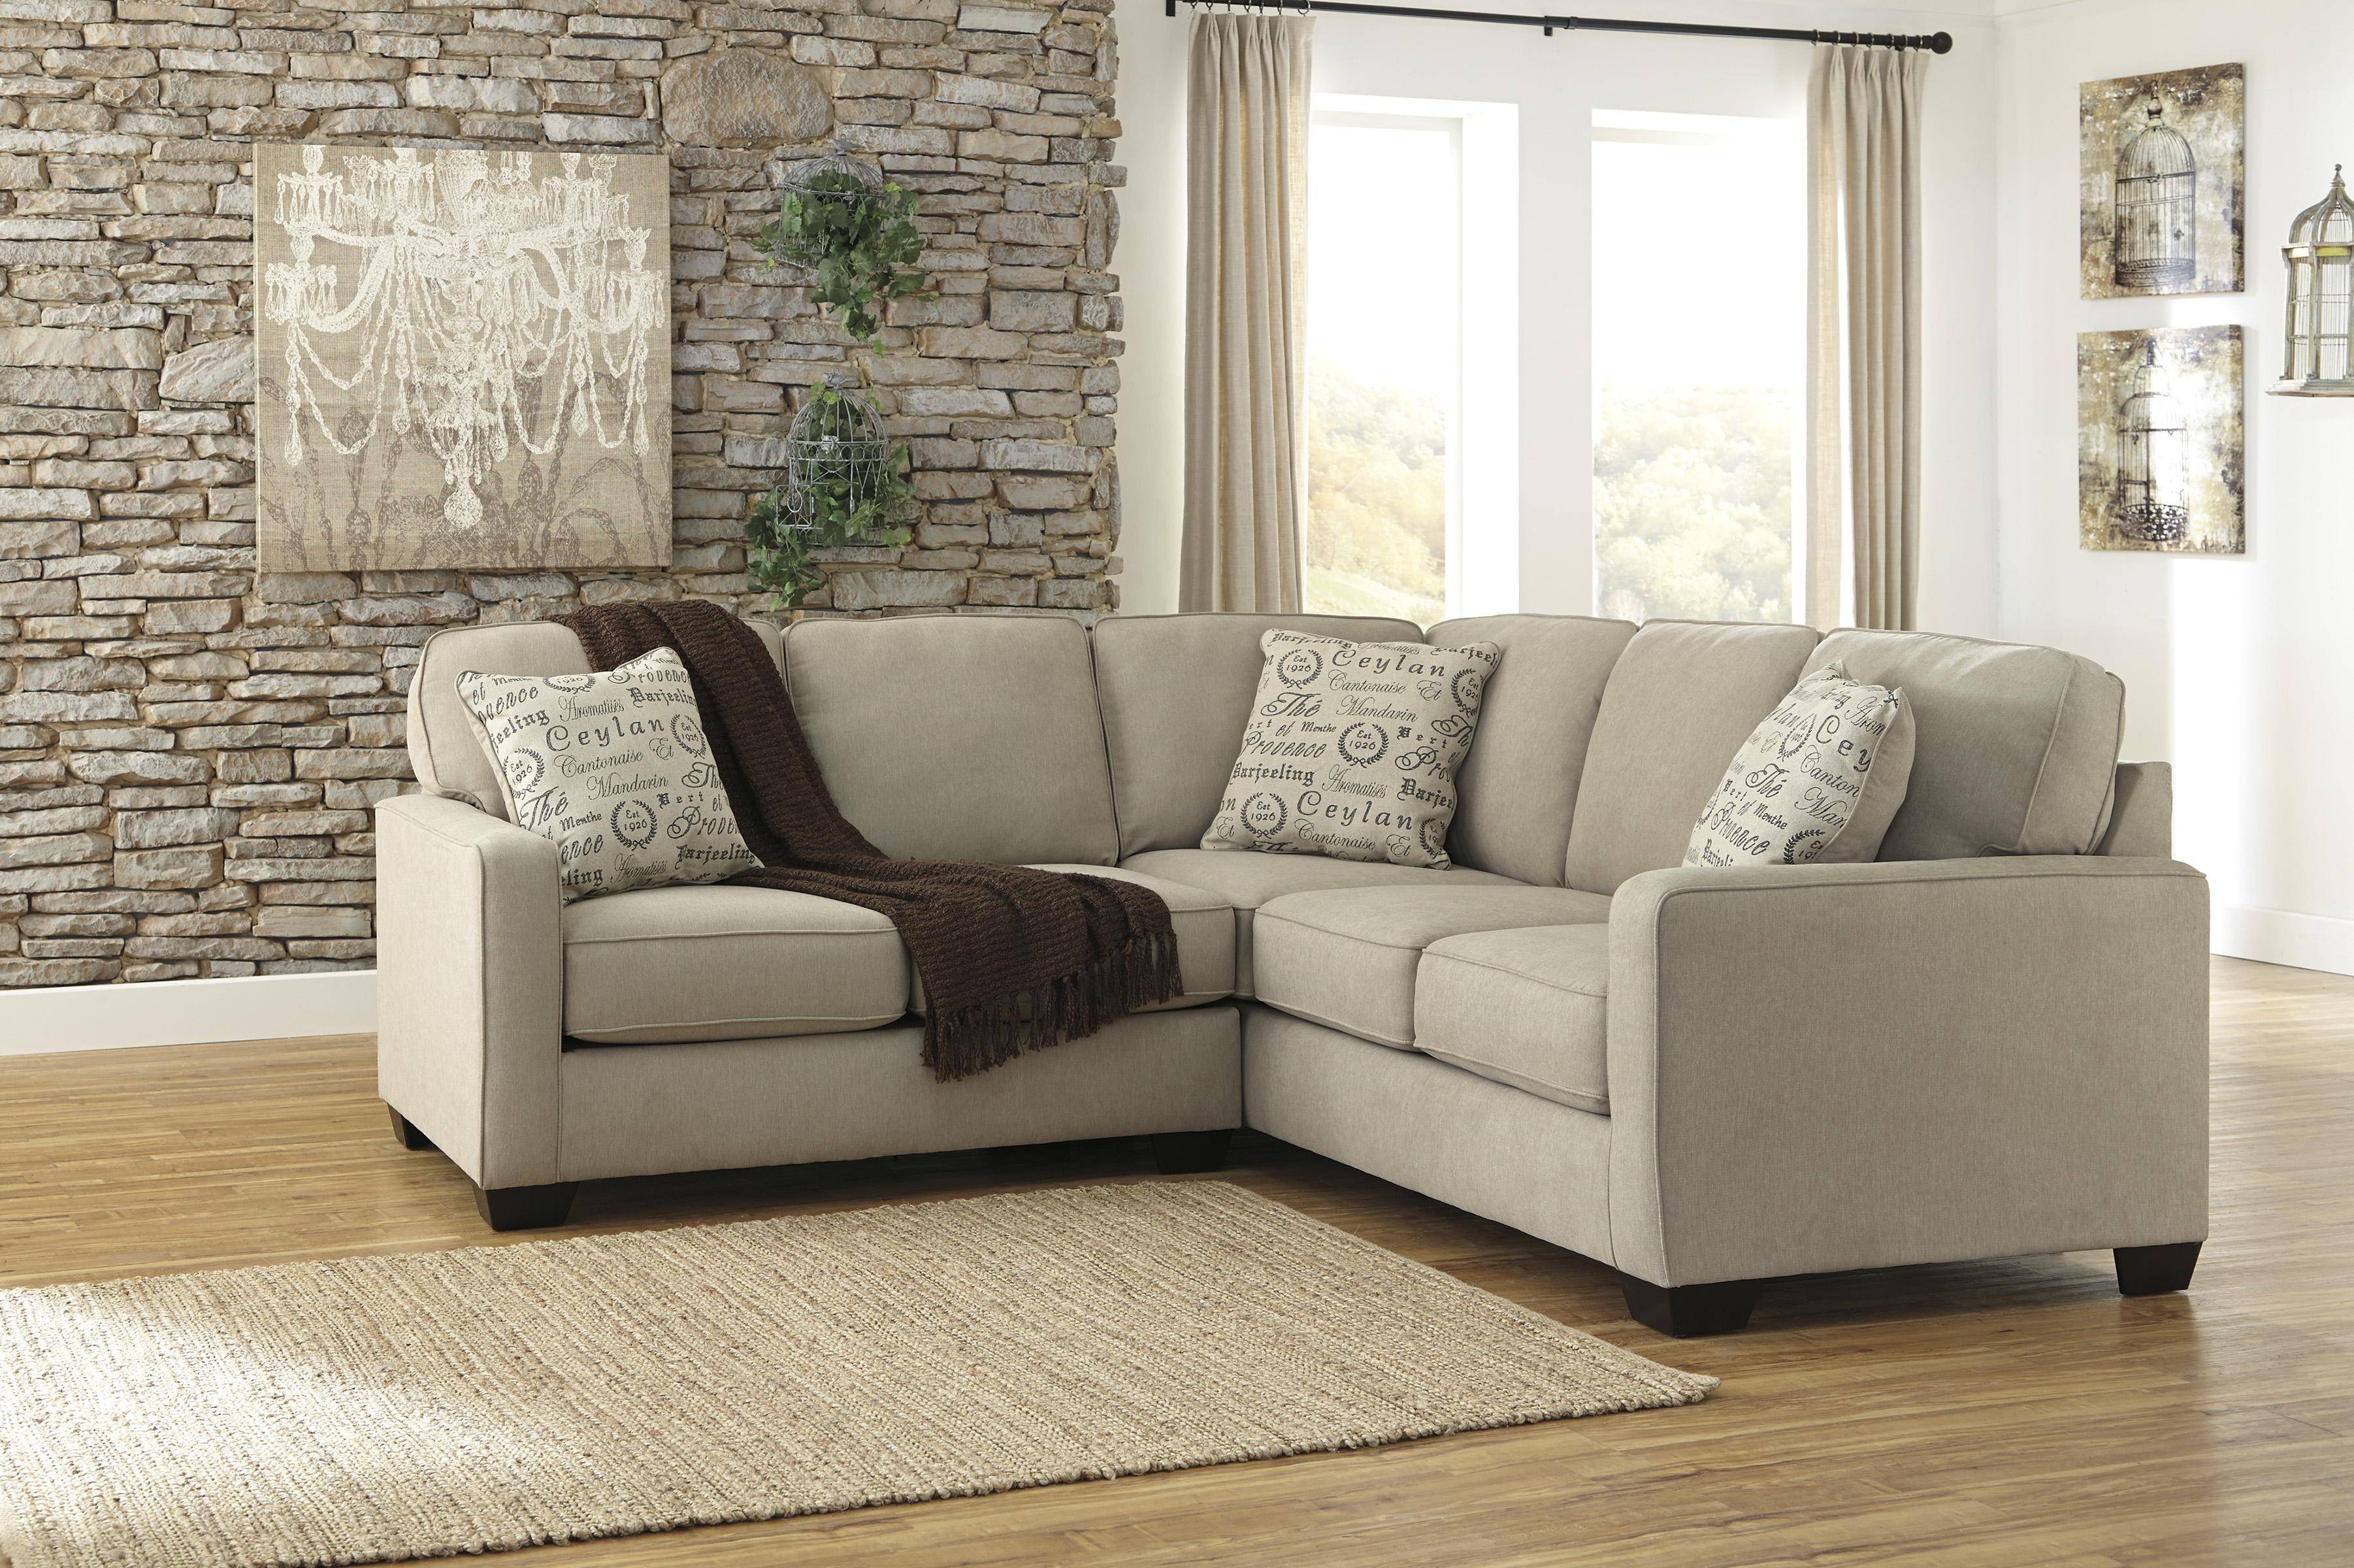 Buy Ashley Alenya Sectional Sofa Left Hand Chase in Quartz, Linen online